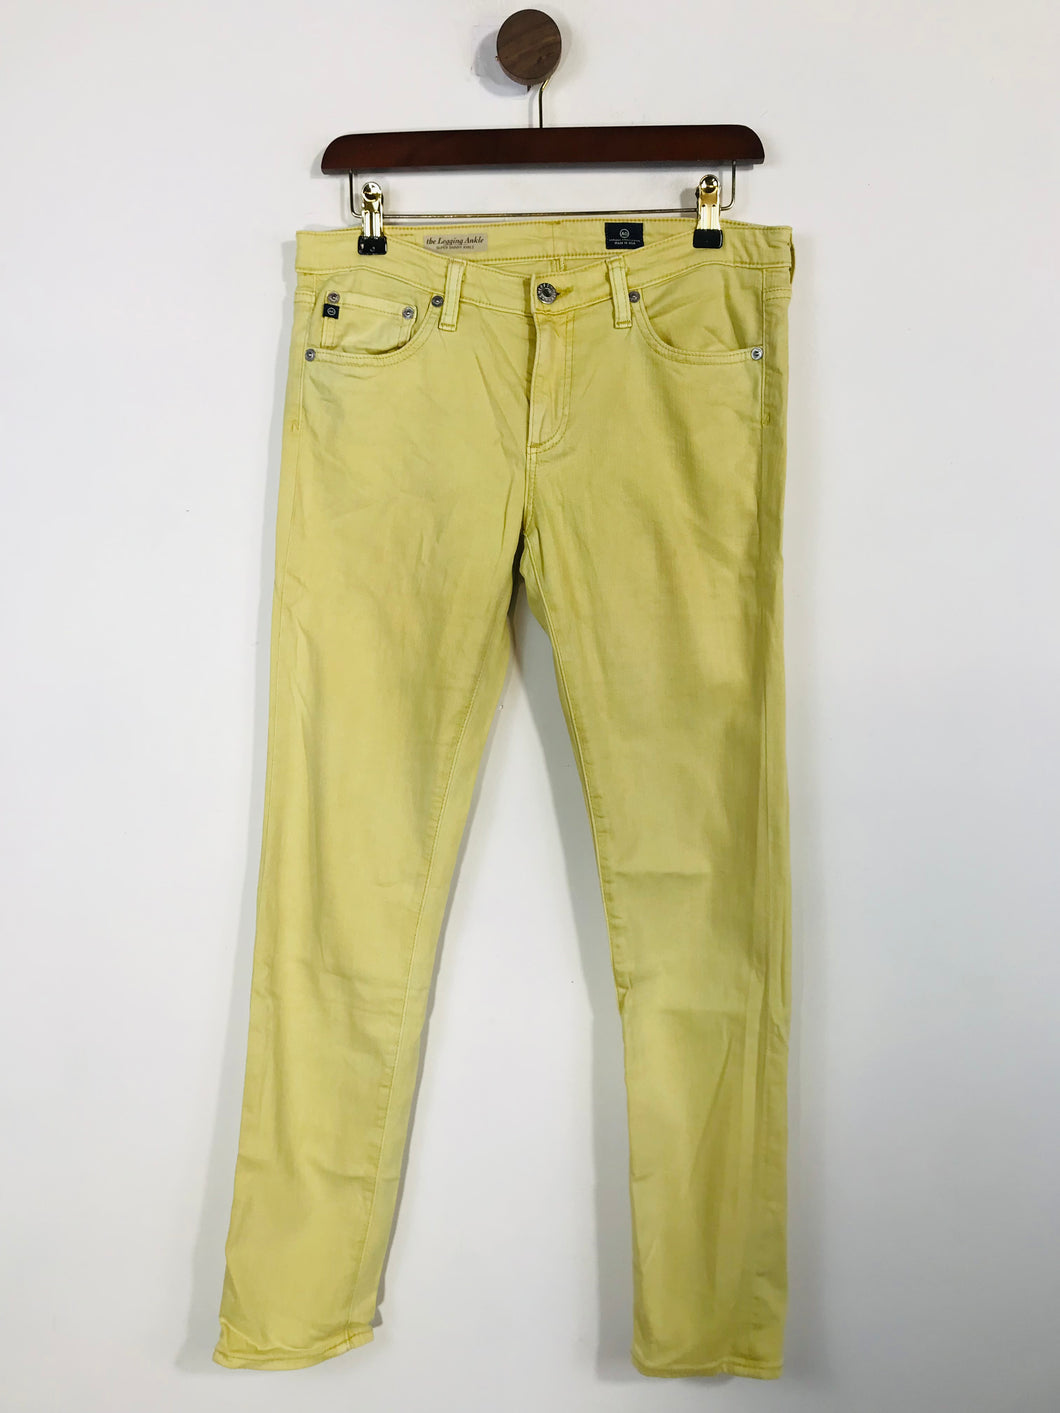 Adriano Goldschmied Women's Crop Skinny Jeans | 29 | Yellow